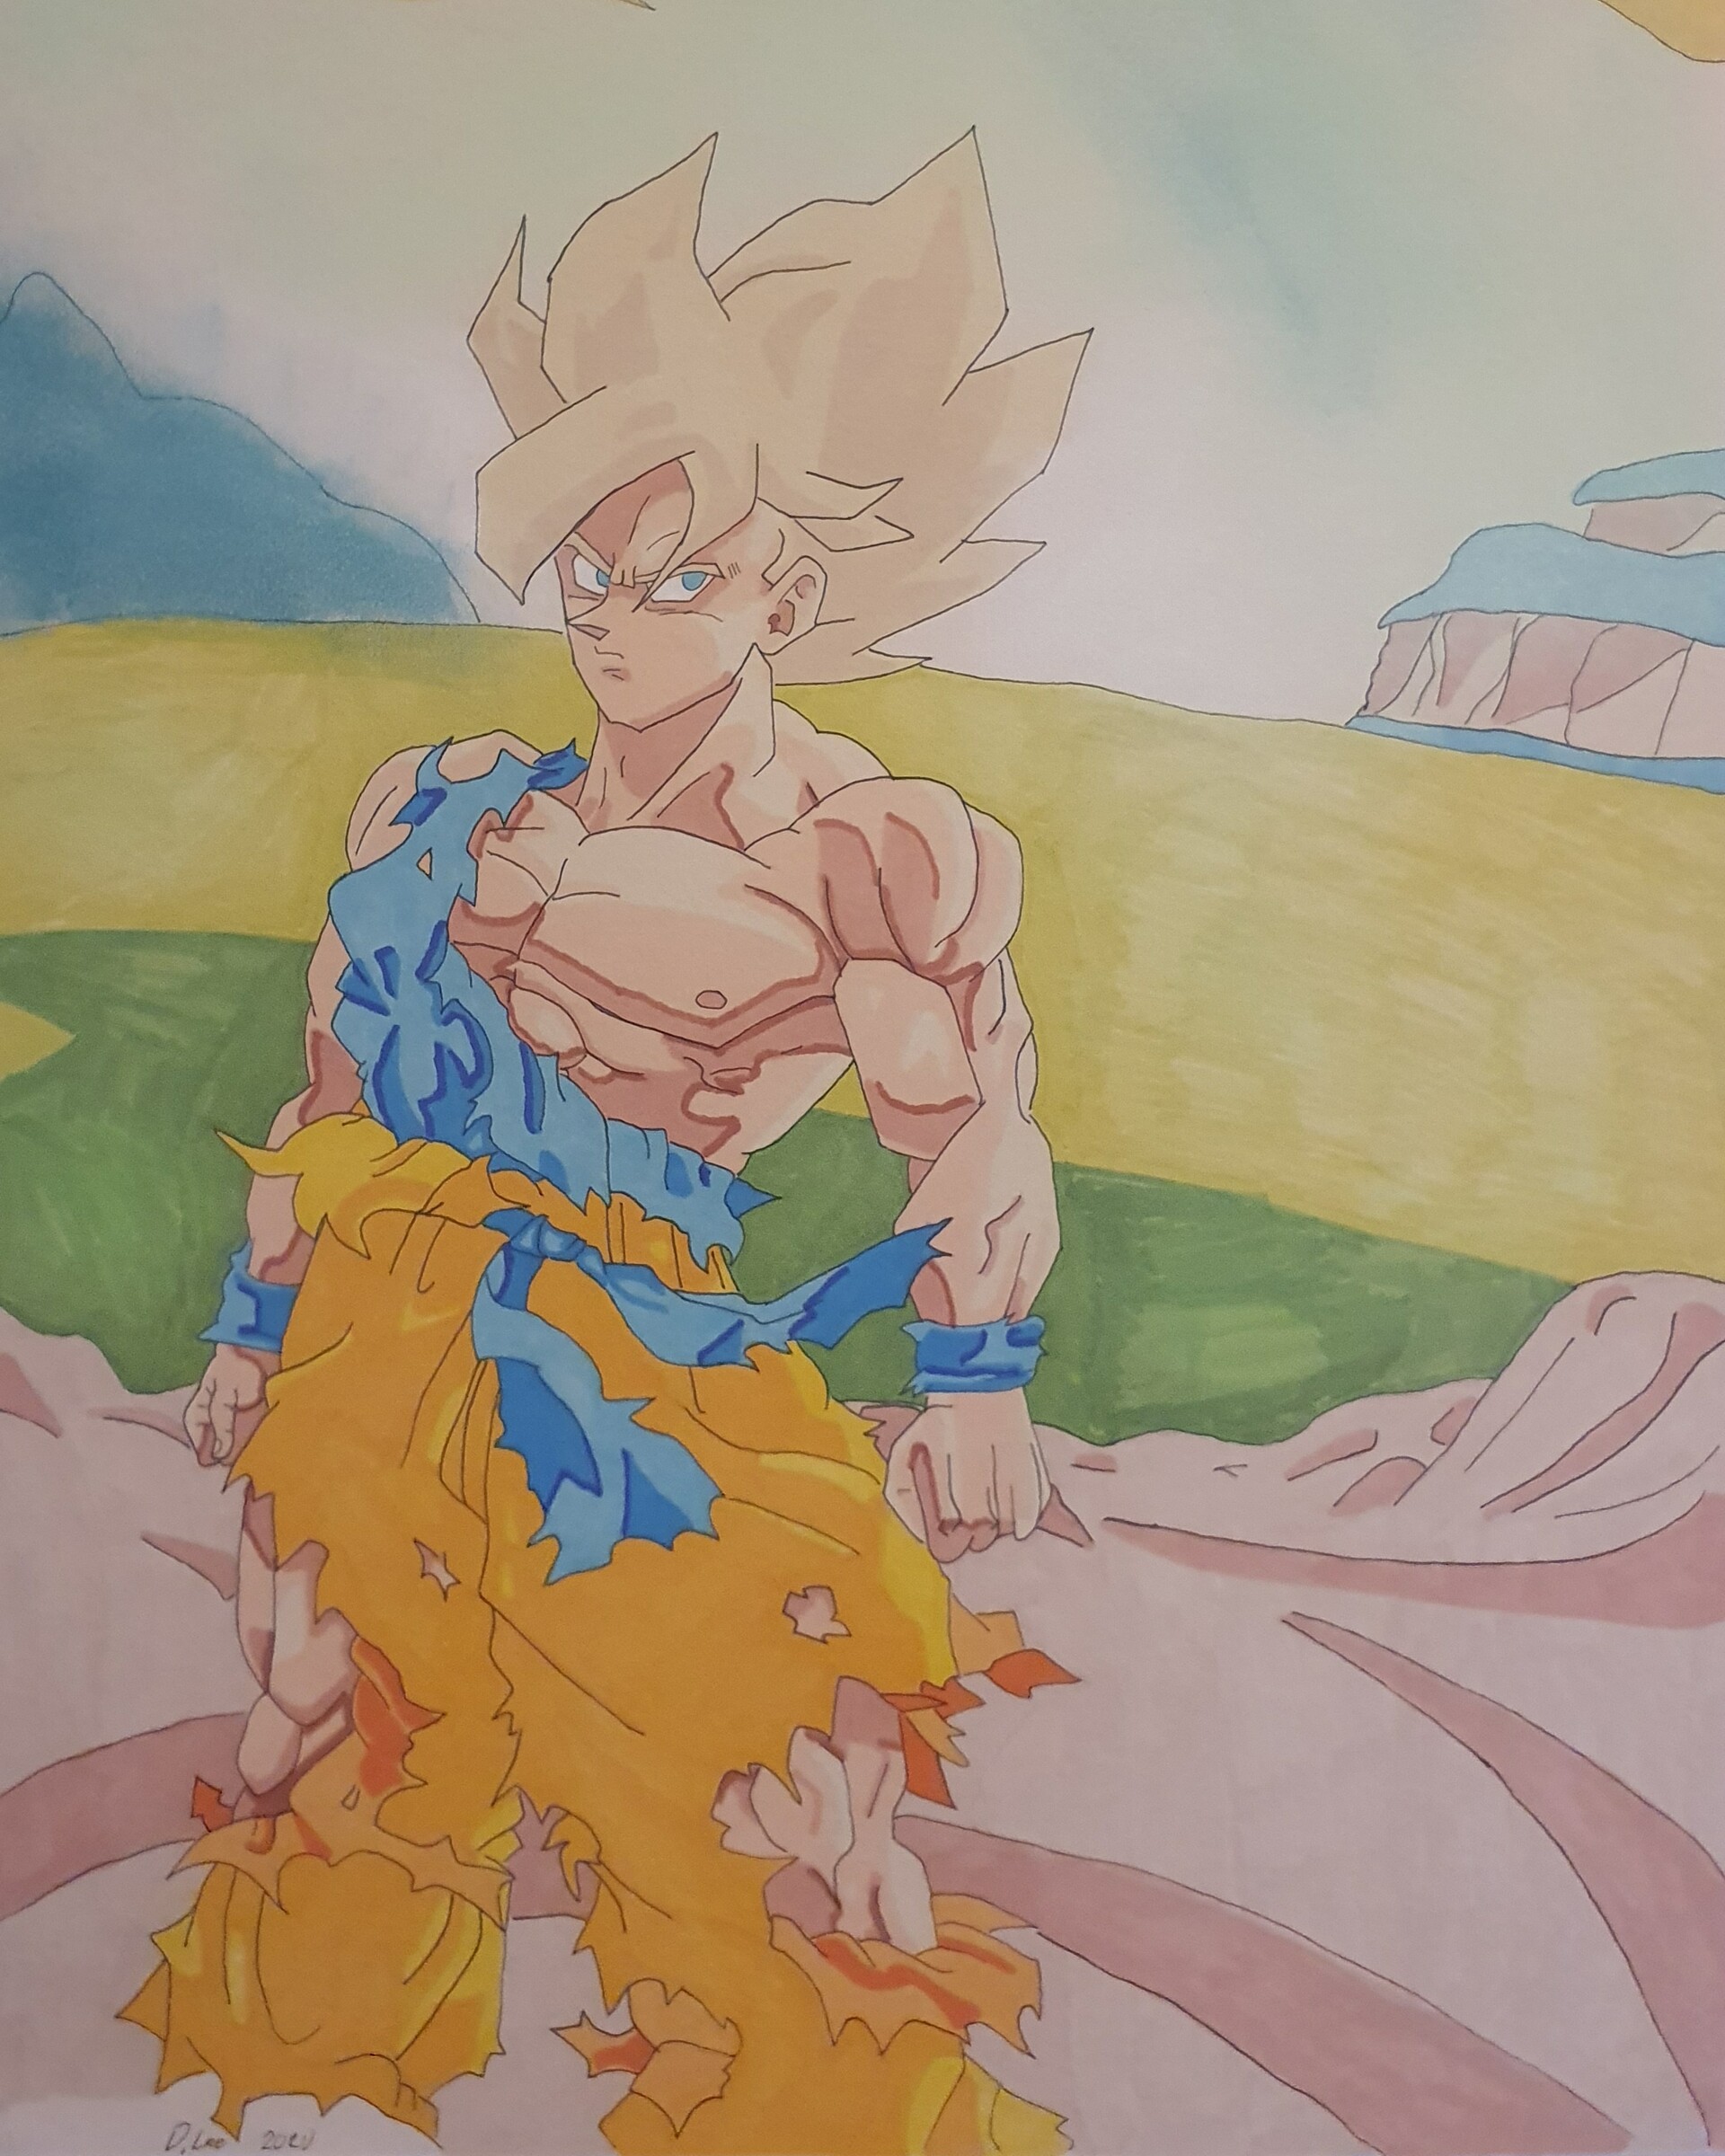 Goku Super Saiyajin artwork I made. Reference pic in the comments : r/dbz